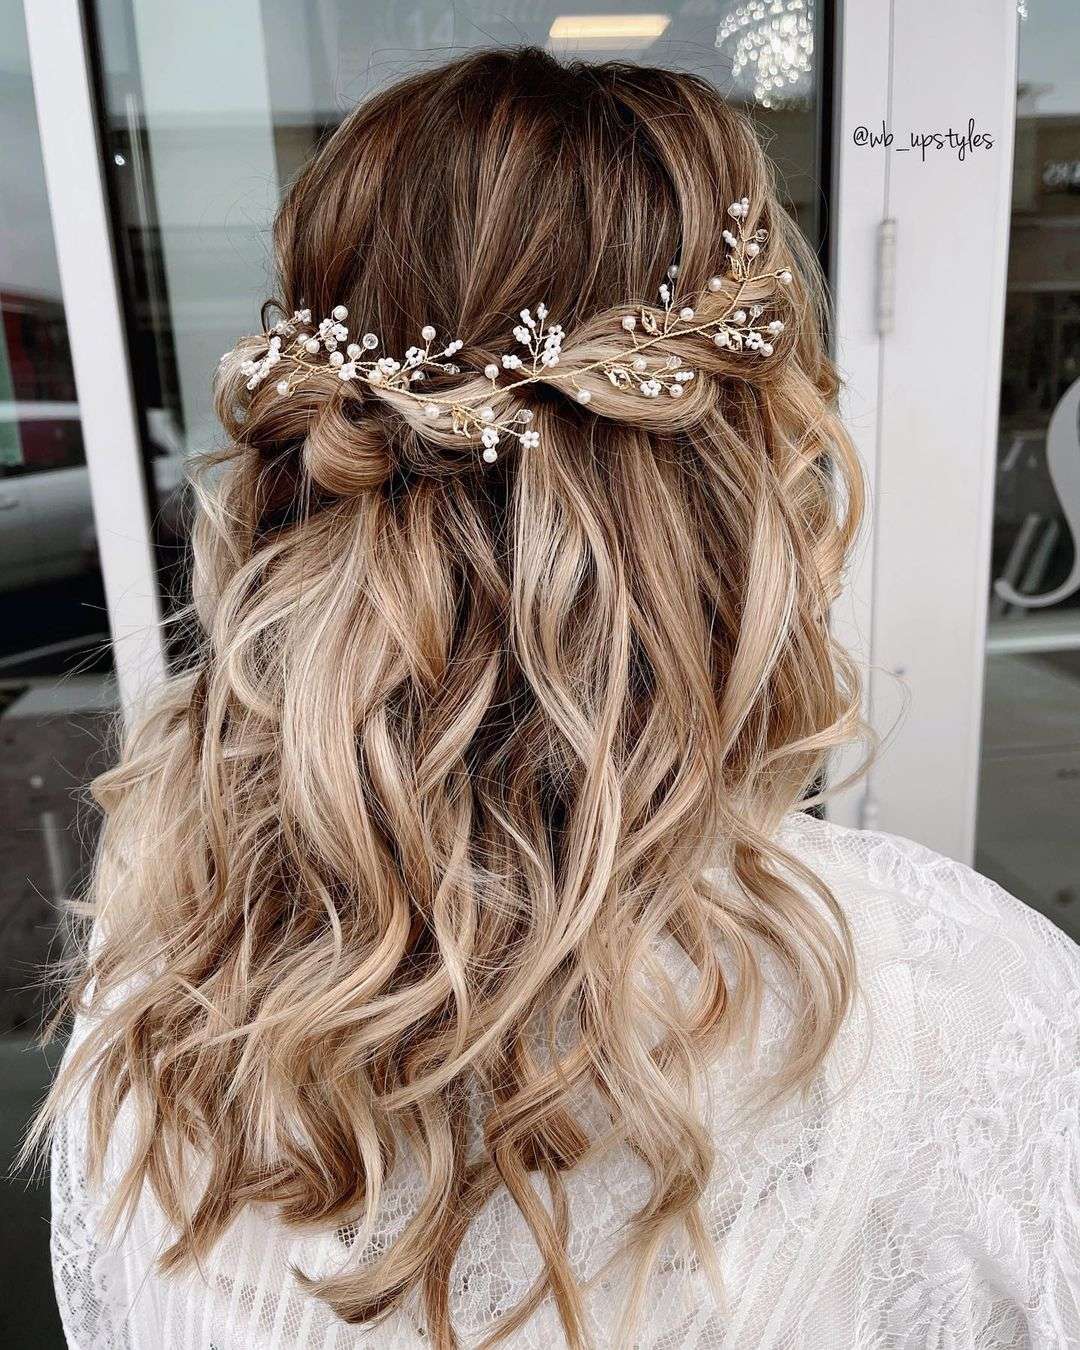 half braided half down hairstyles for medium length prom hair via wb_upstyles